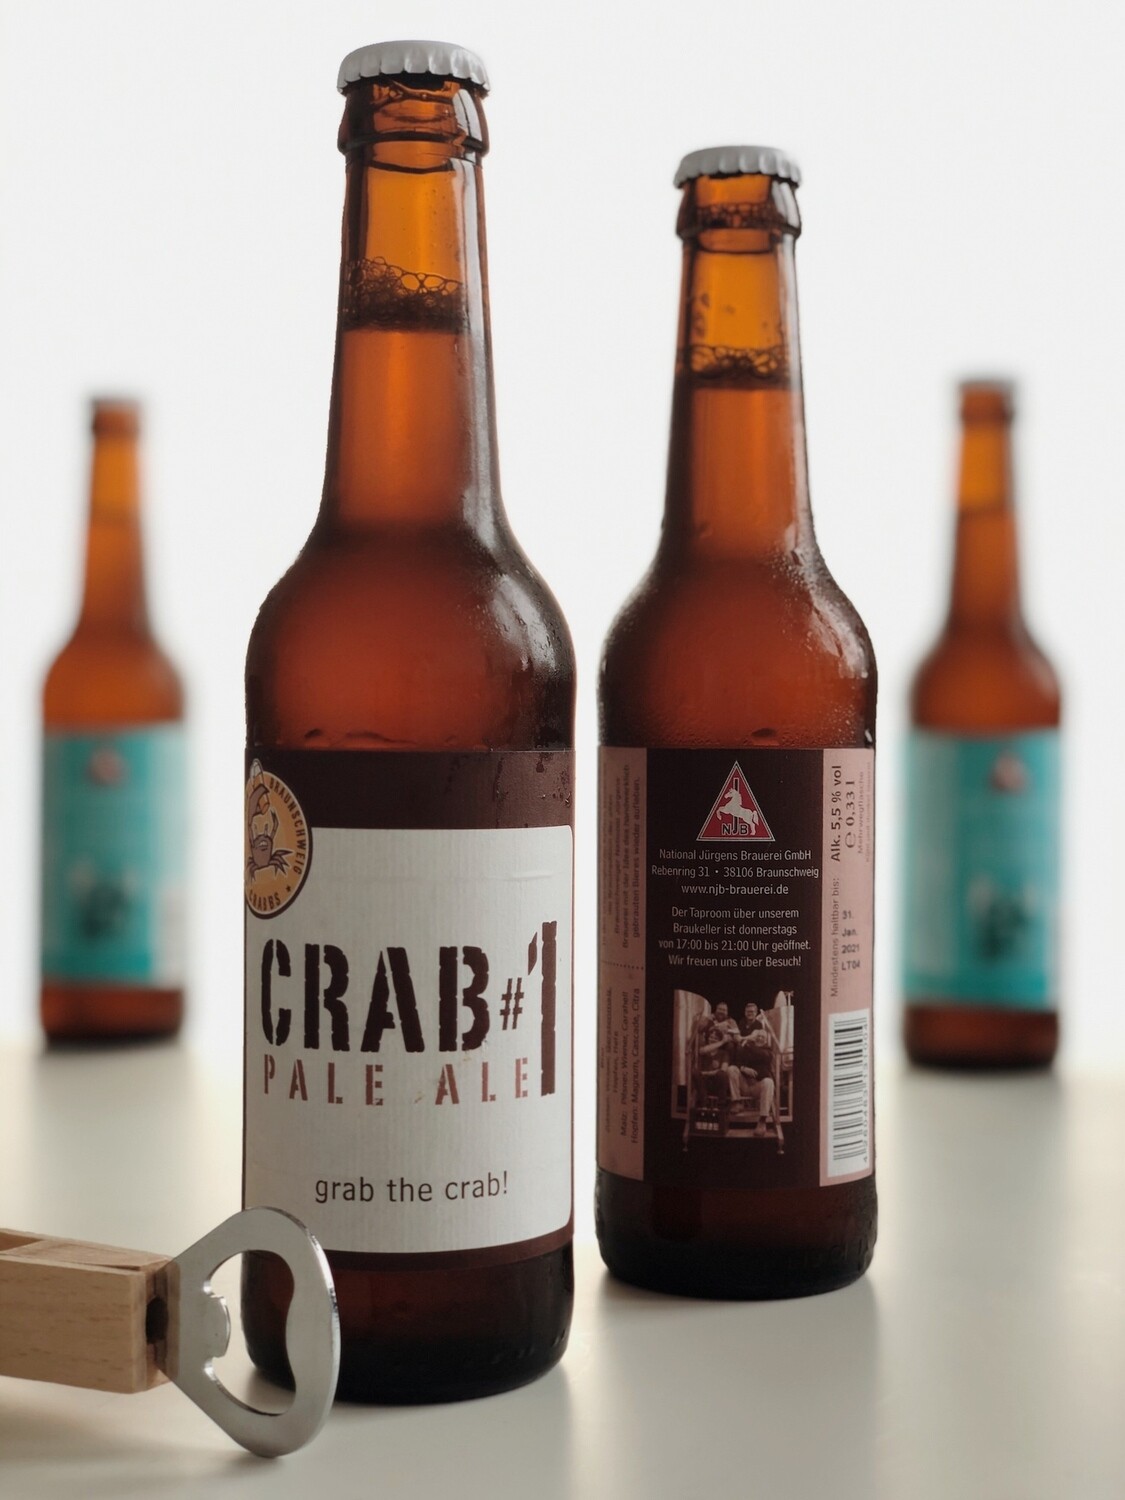 Craft Beer mit Logo - Crab #1 Pale Ale 0,33l